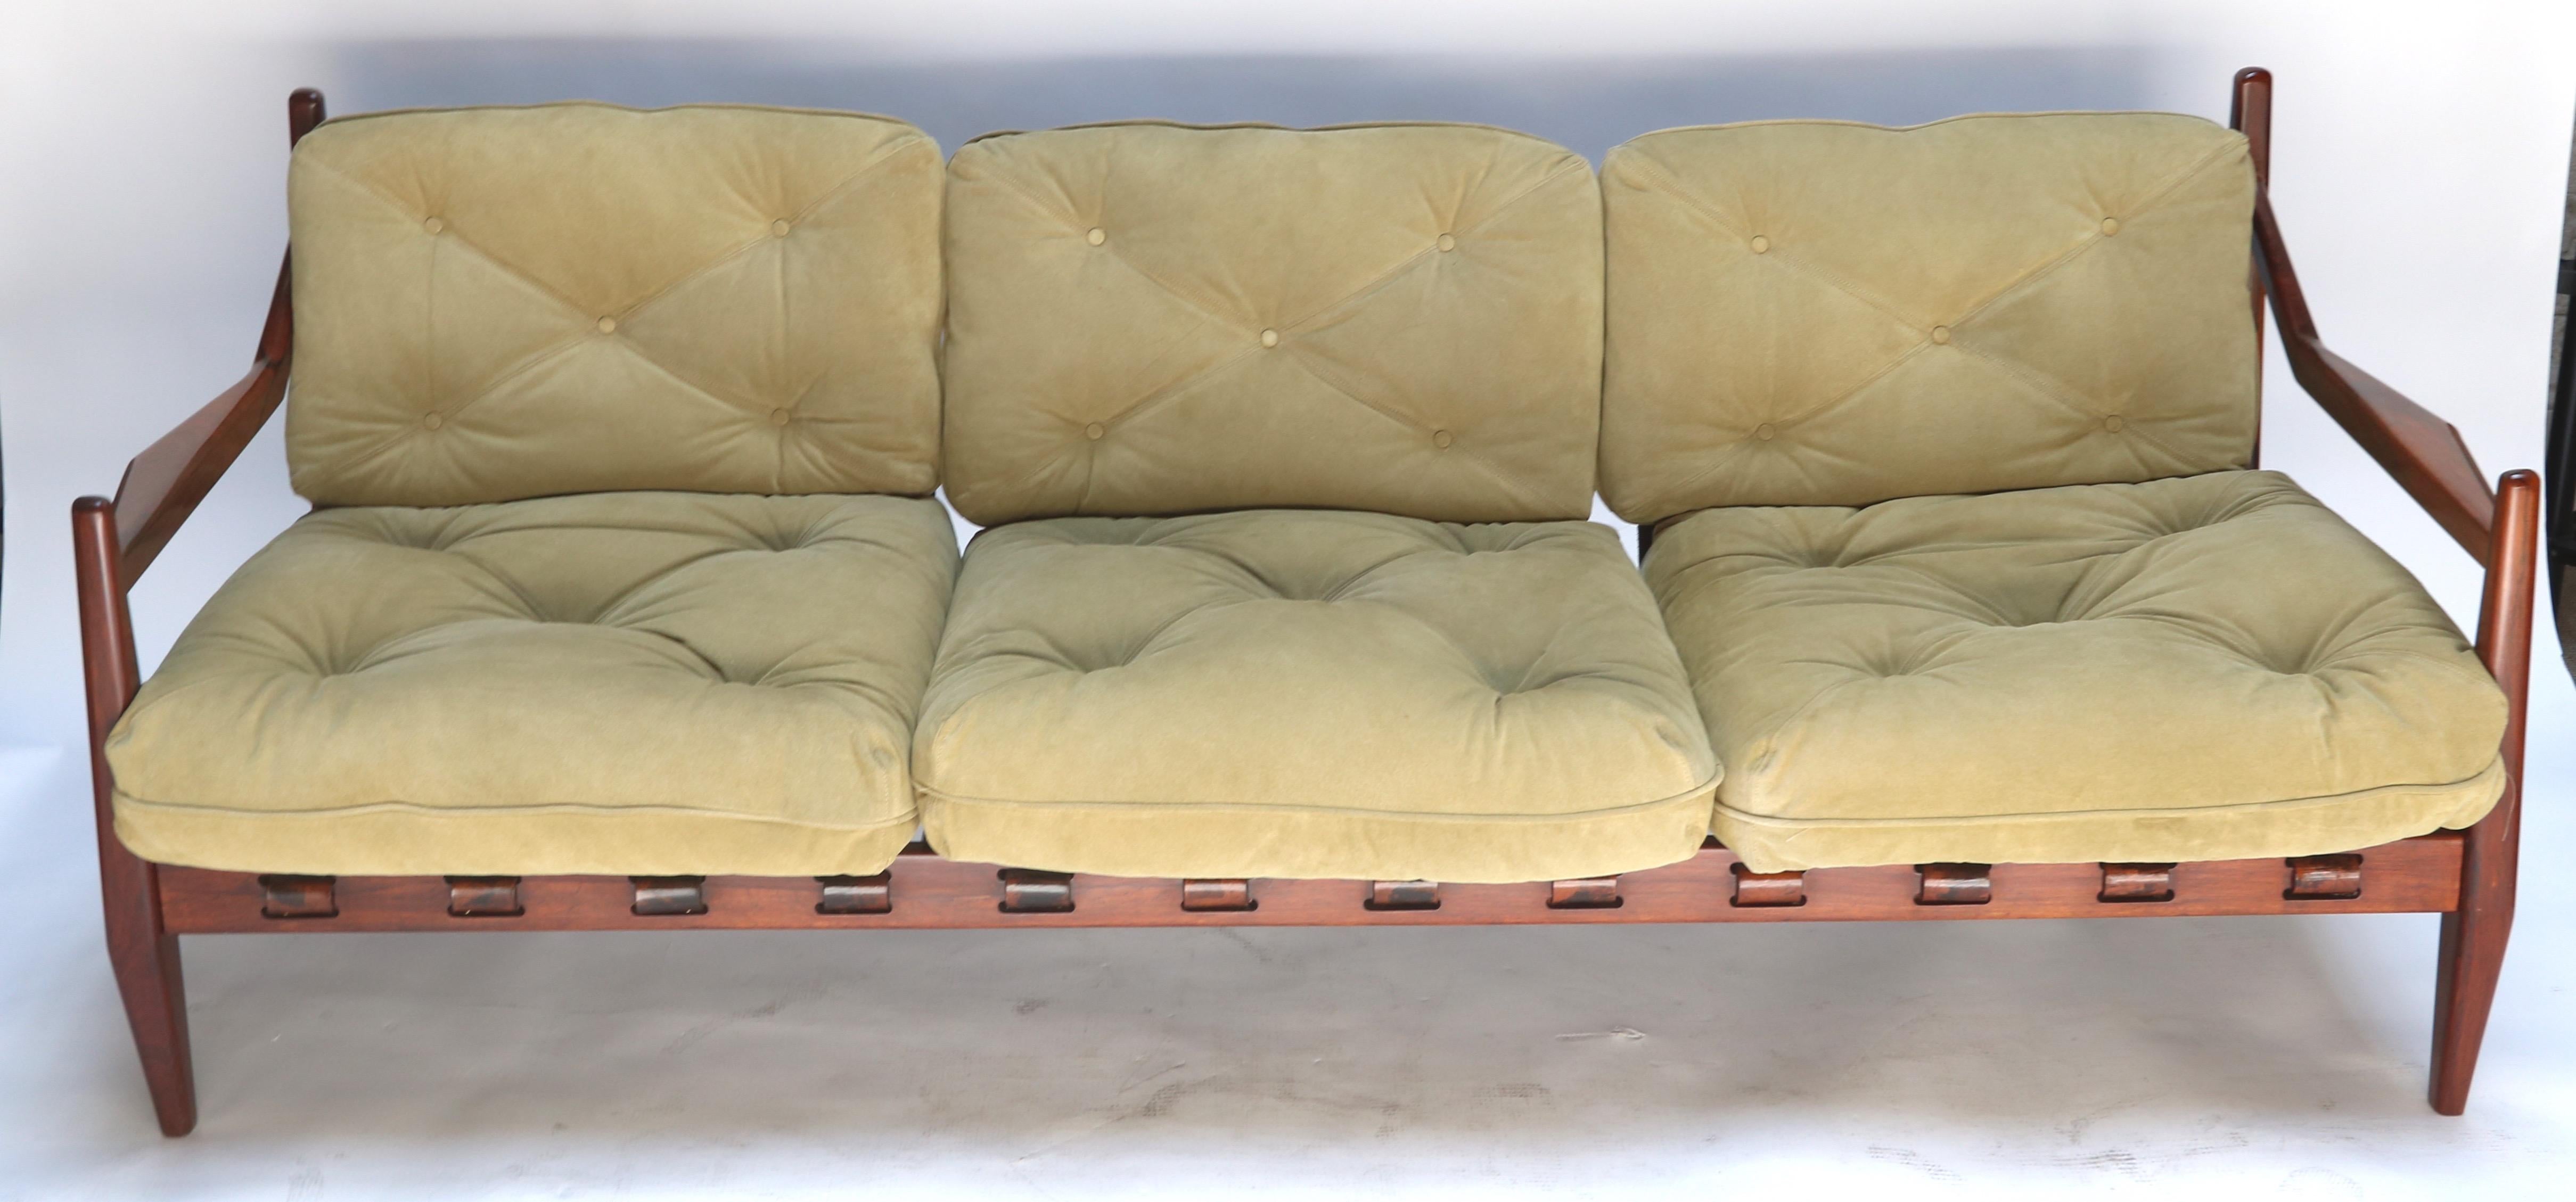 1960's sofa